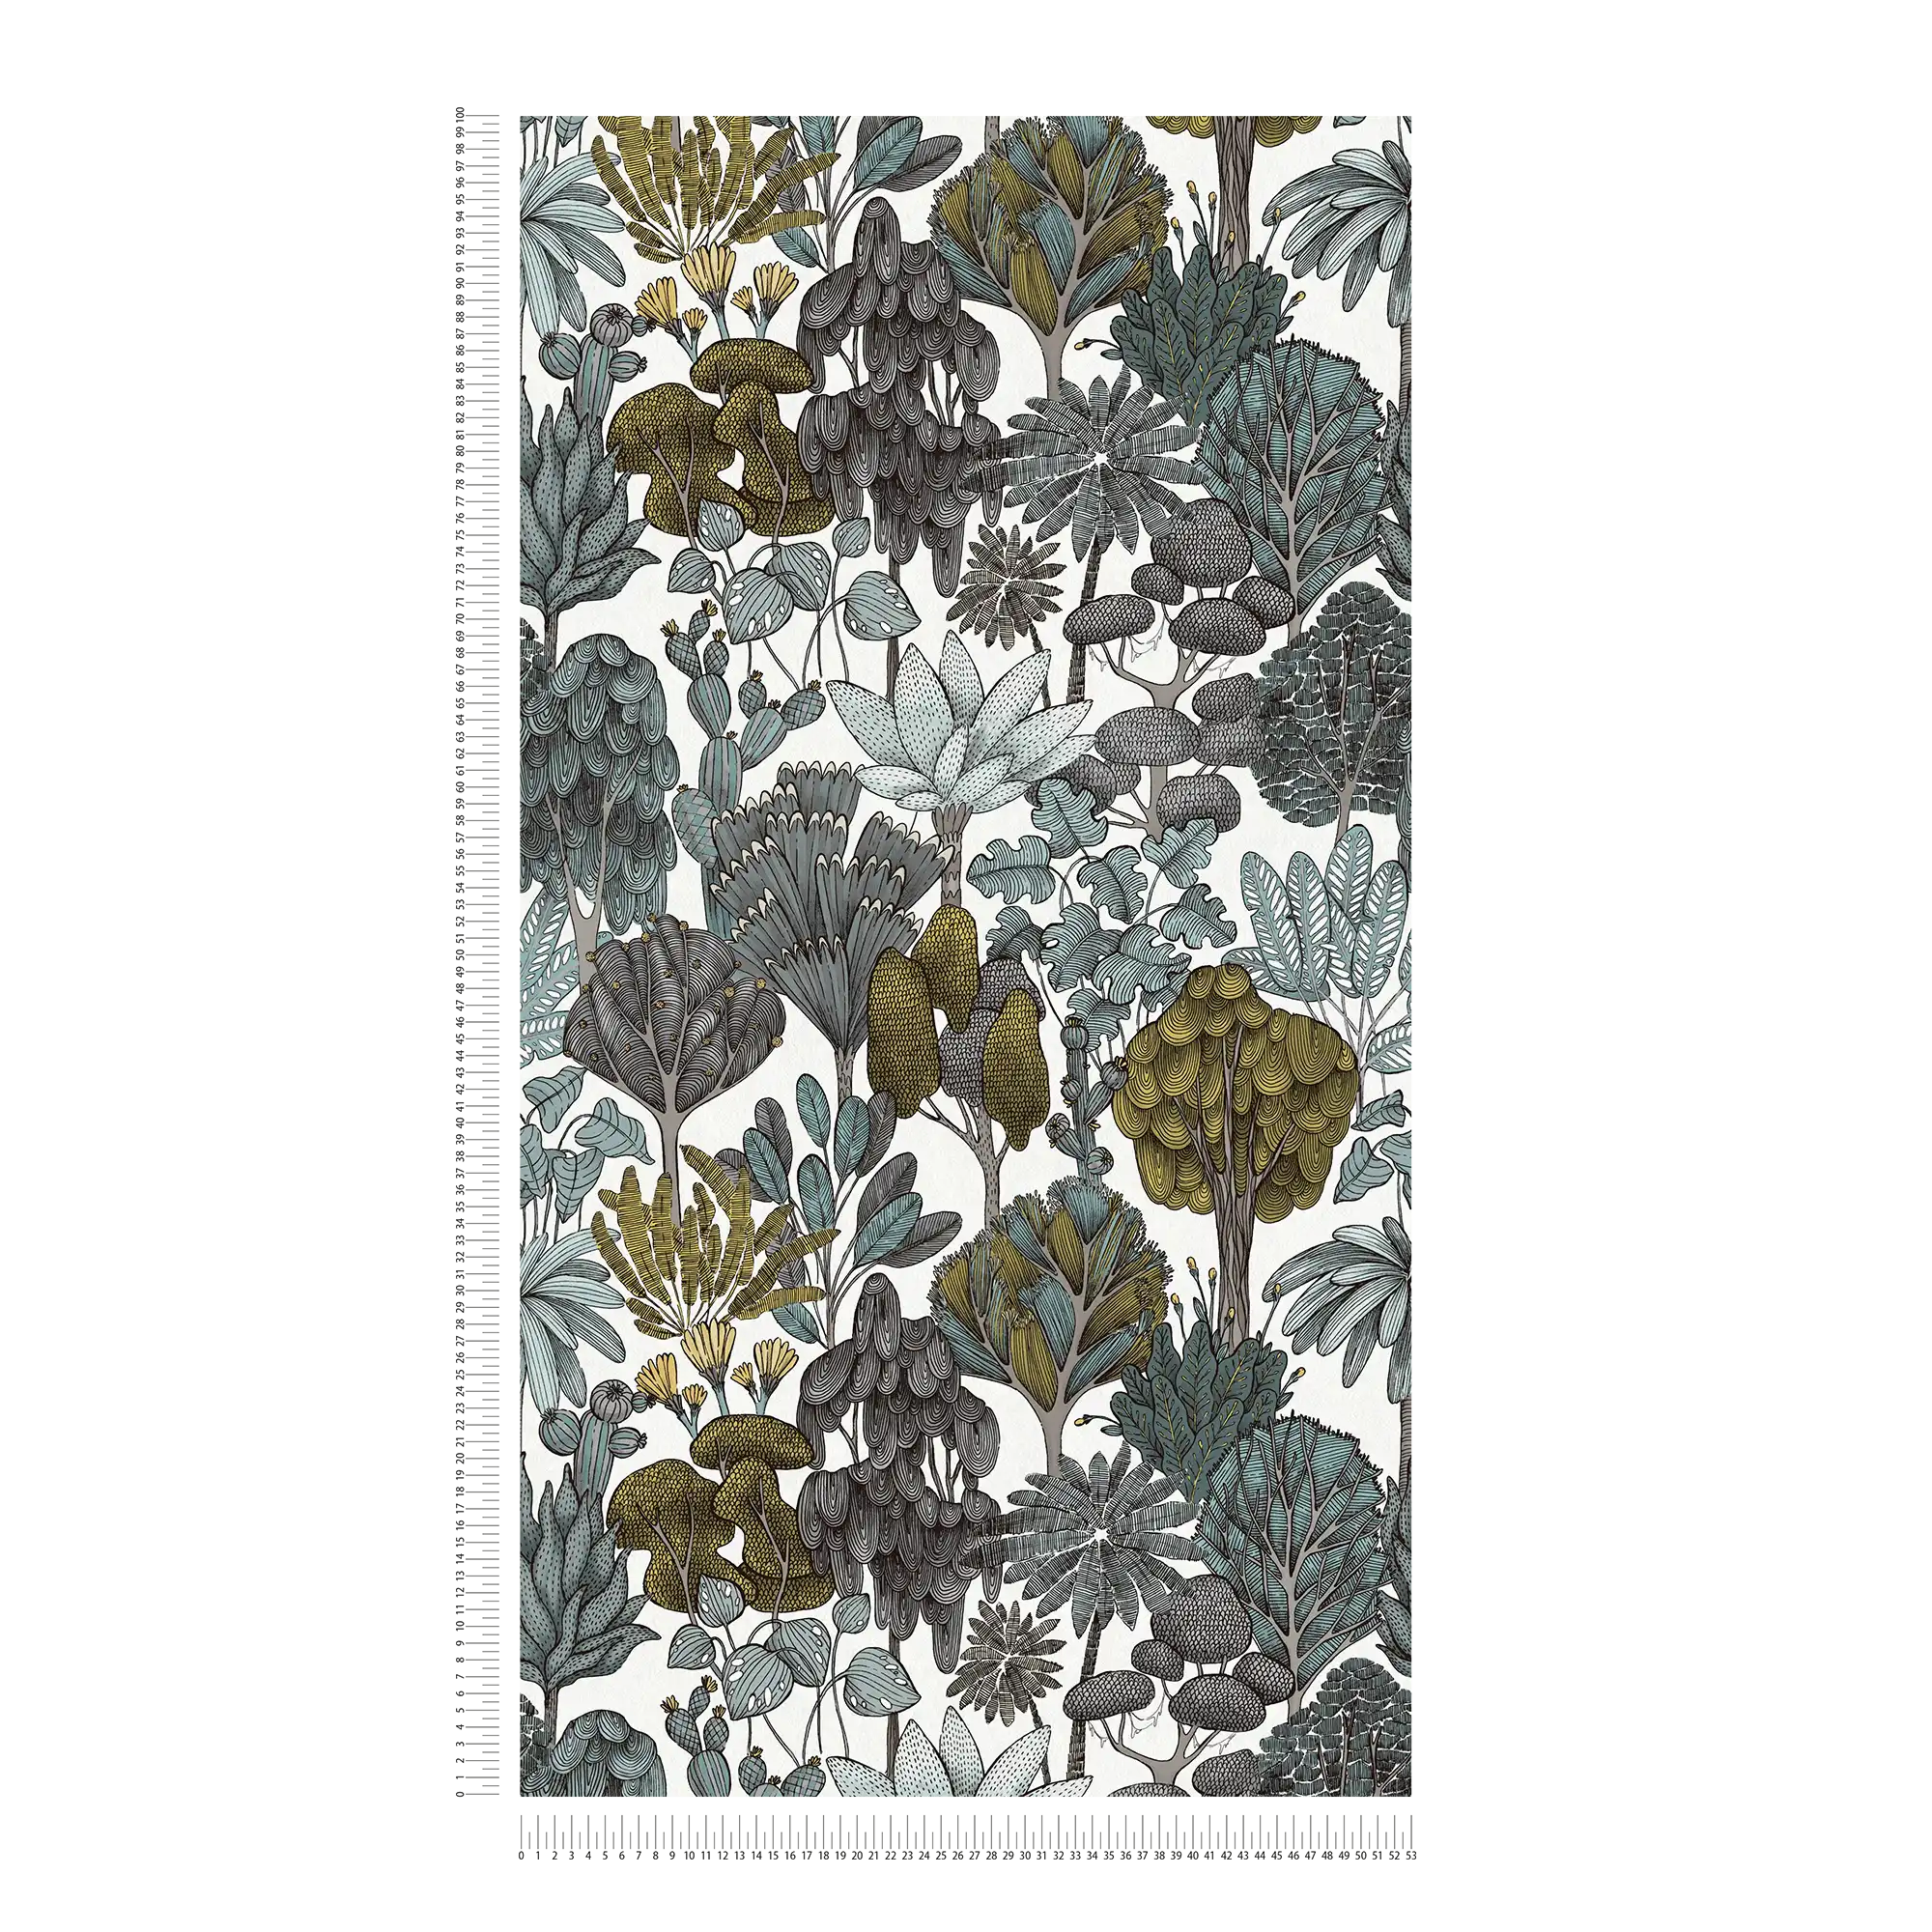             Tapete Grün Grau florales Muster im Doodle Stil – Grün, Grau, Gelb
        